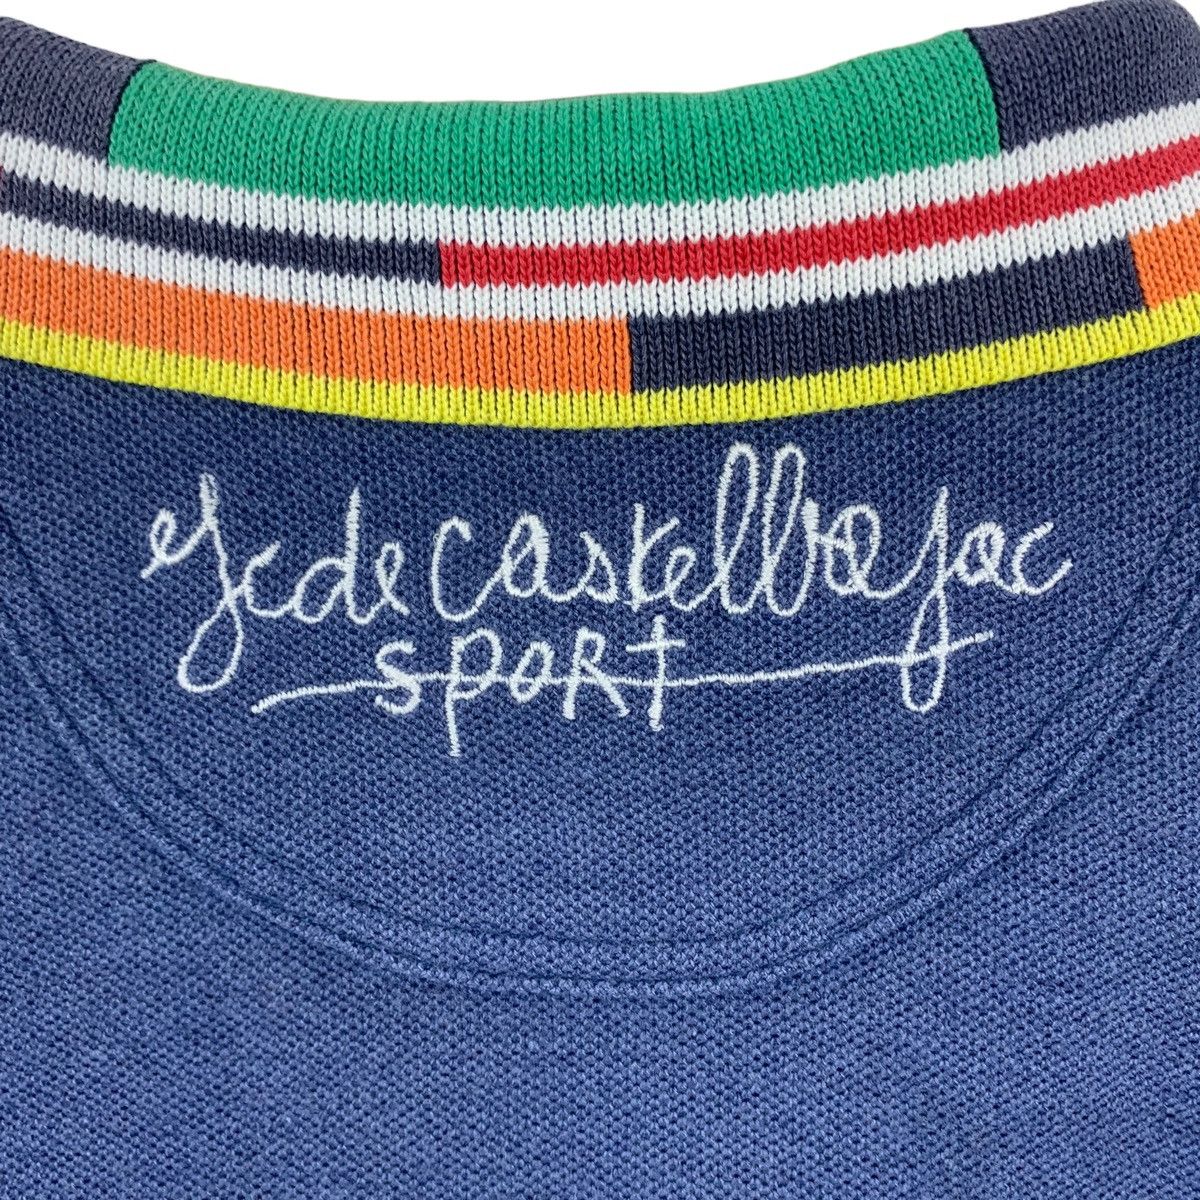 Vintage Rare!! Vintage JEAN CHARLES de CASTELBAJAC polo shirt Size US S / EU 44-46 / 1 - 9 Thumbnail